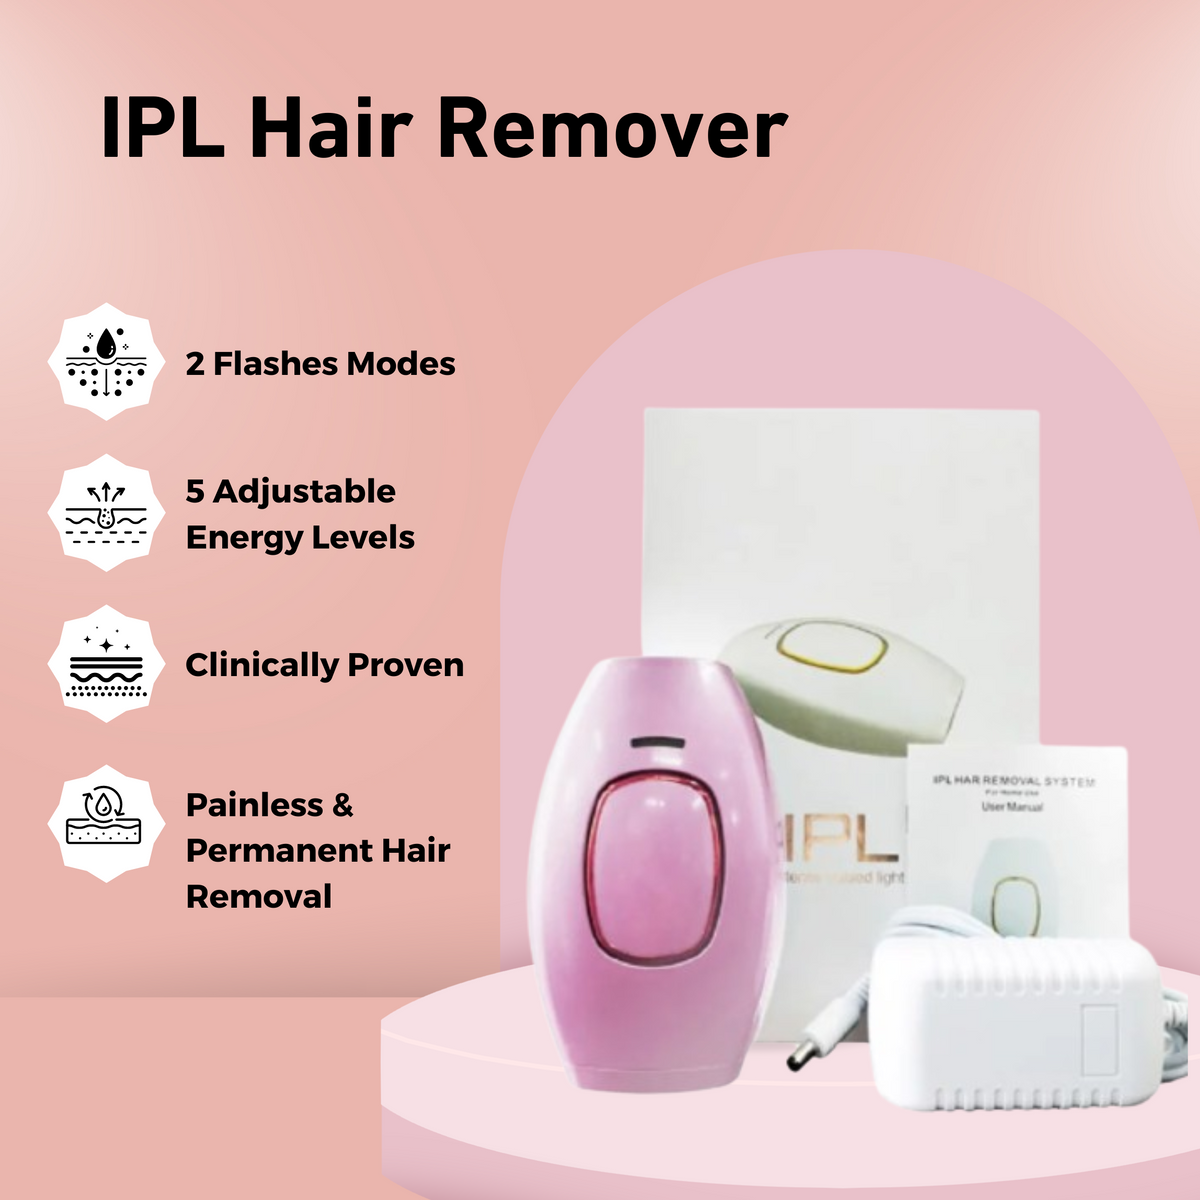 IPL Hair Remover